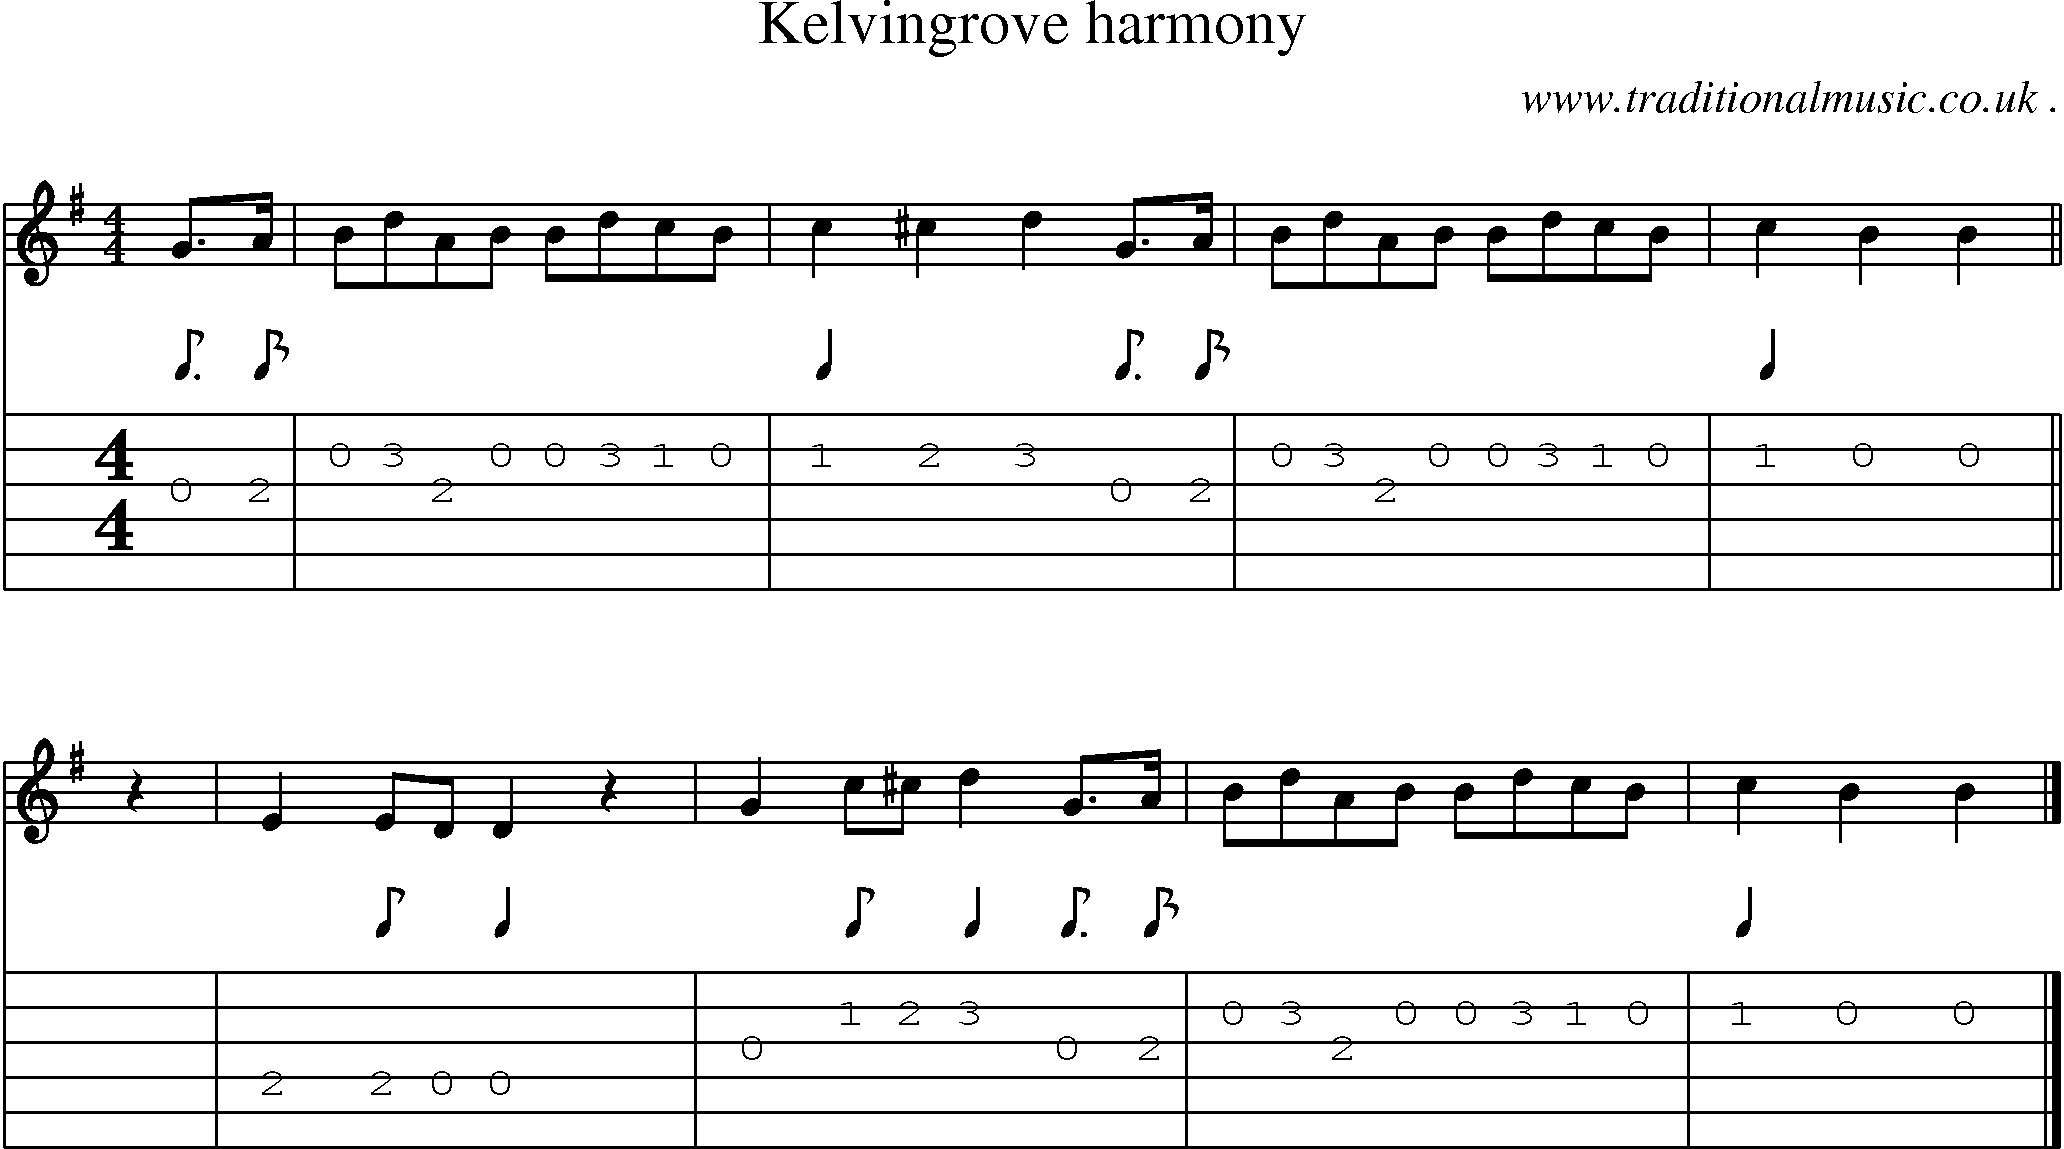 Sheet-music  score, Chords and Guitar Tabs for Kelvingrove Harmony